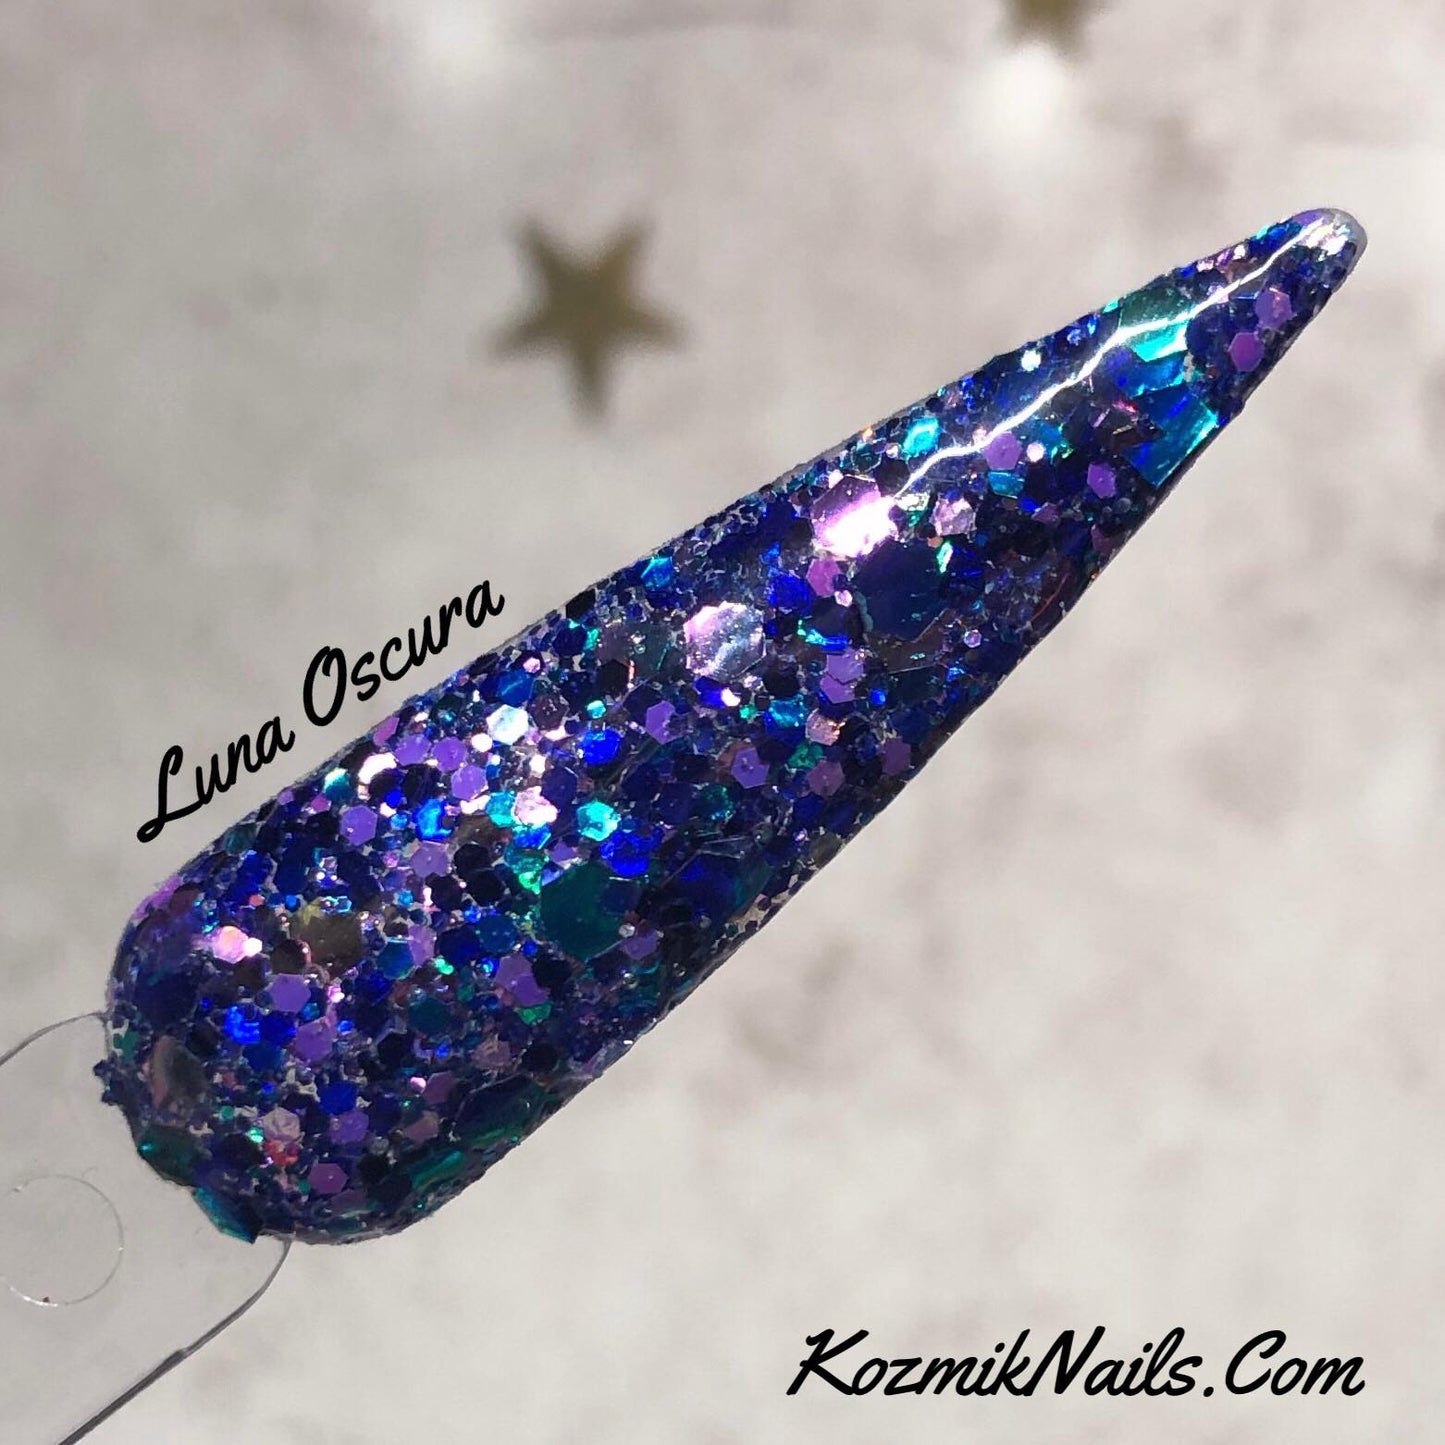 Luna Oscura (Limited Release)